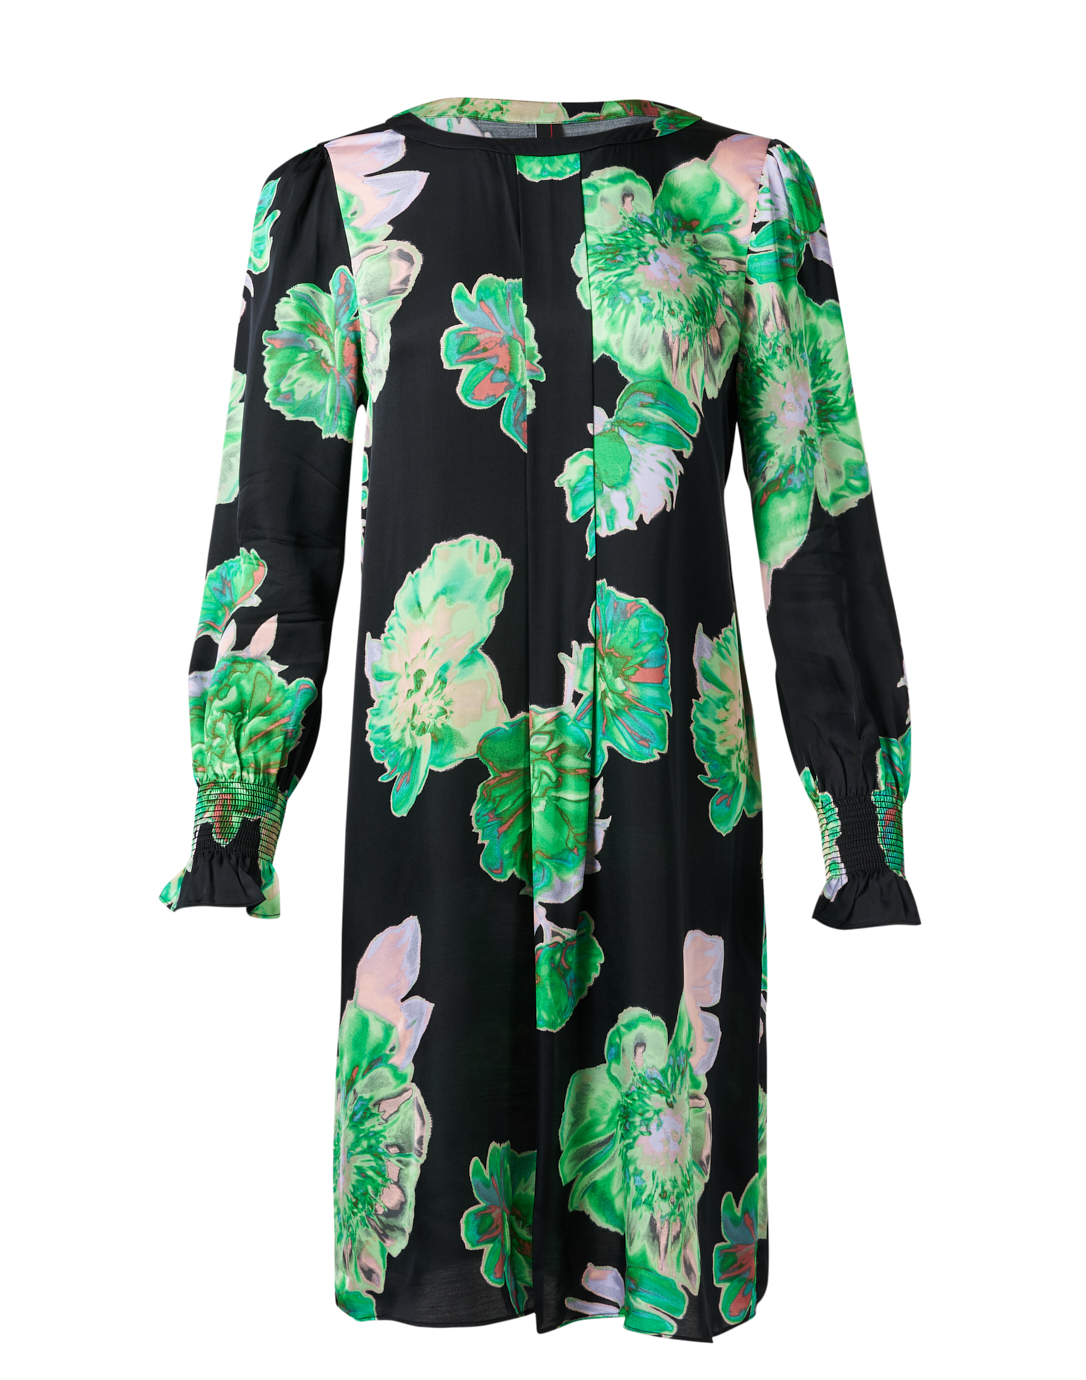 YOURS LONDON Plus Size Black Poppy Floral Print Dress